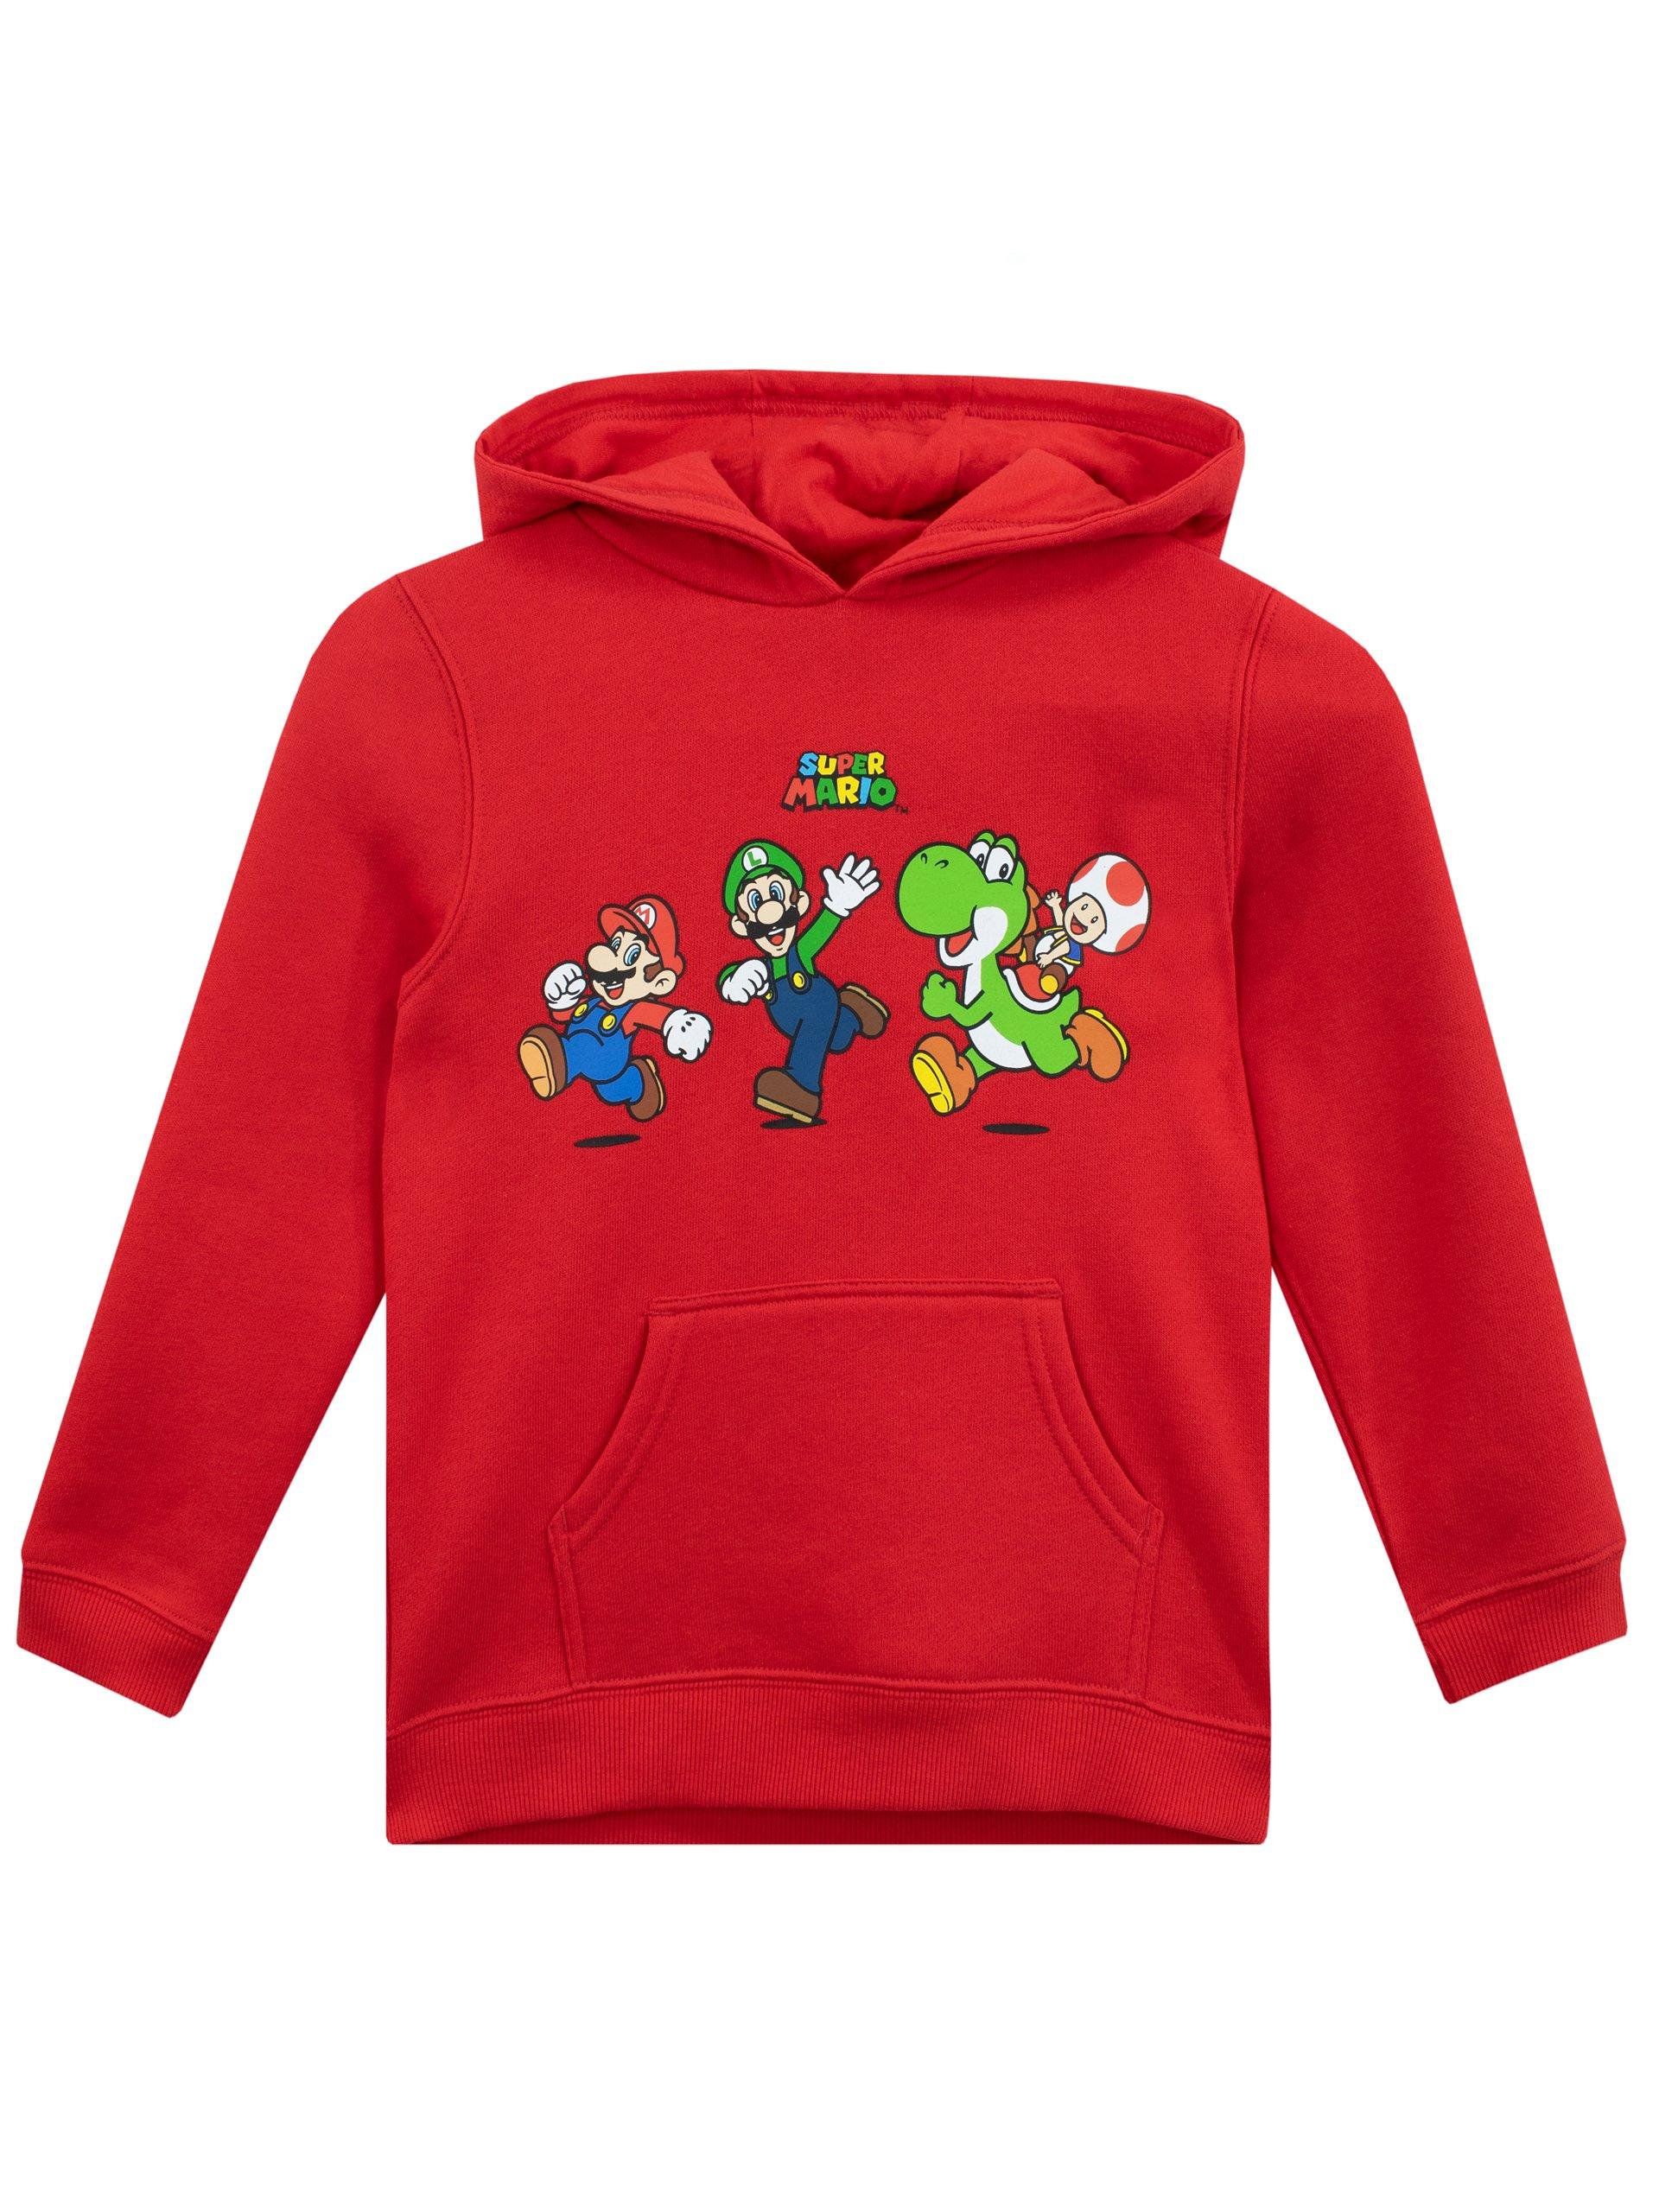 Mario and Luigi Gaming Hoodie